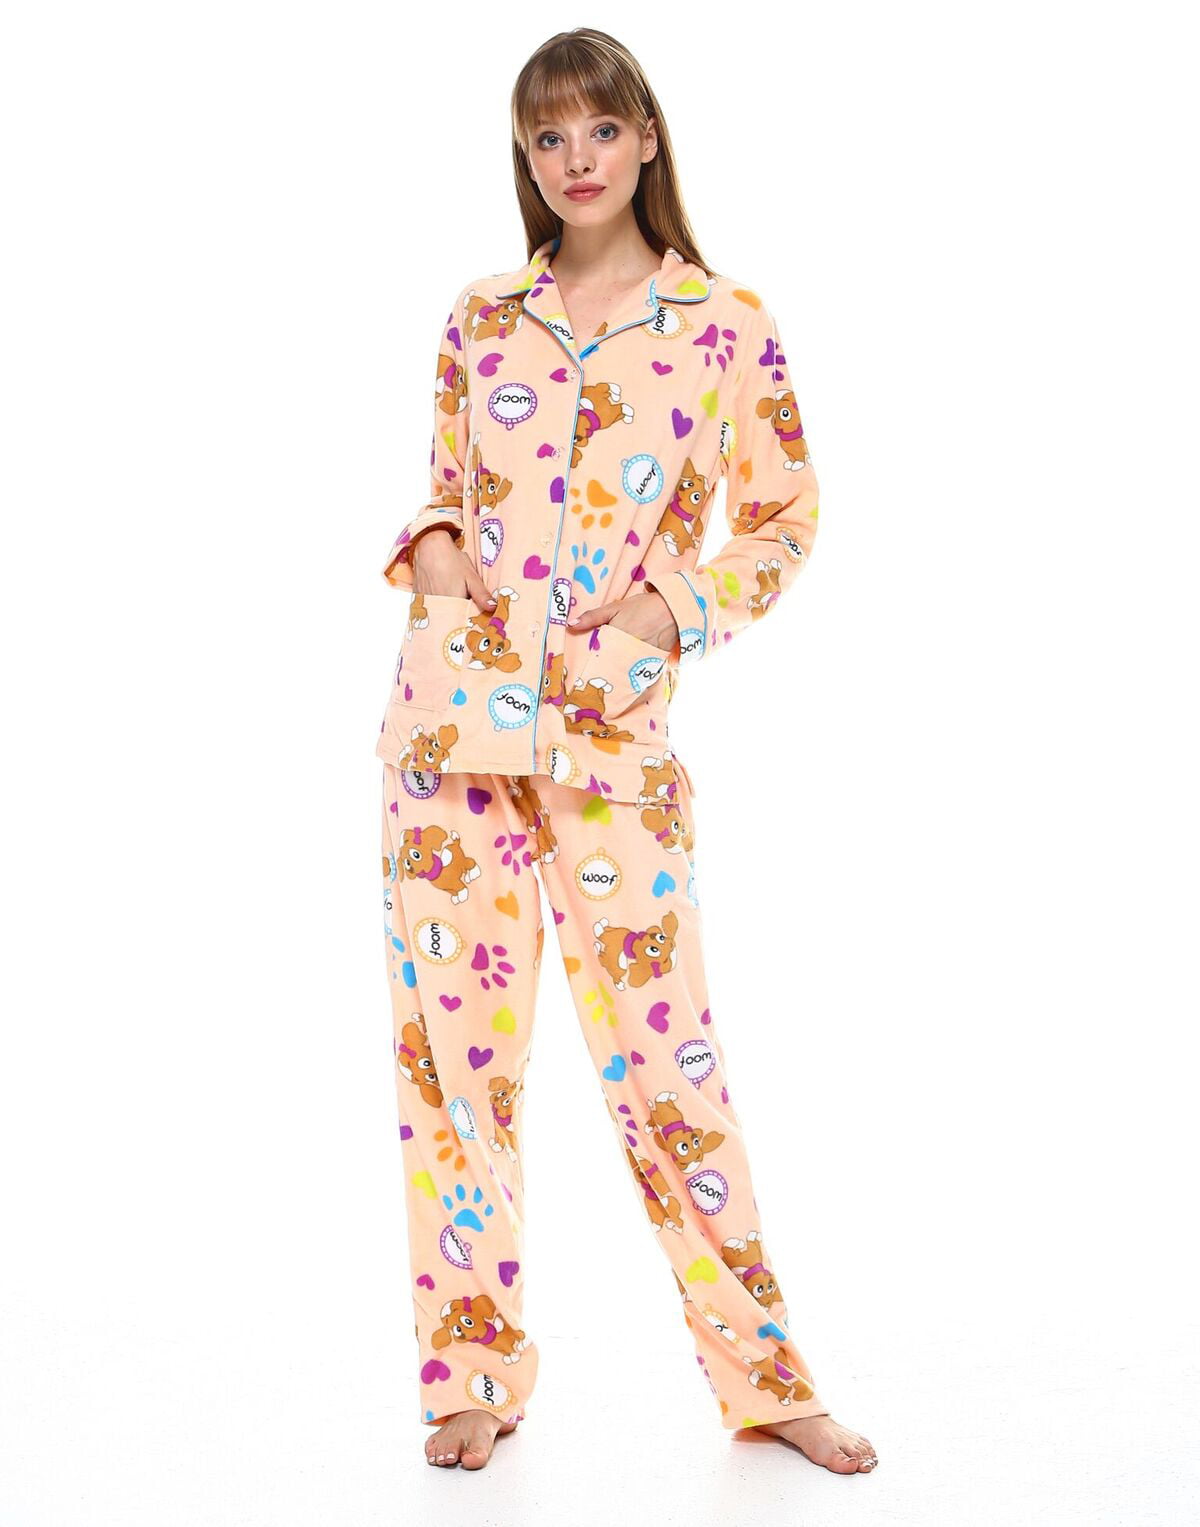 Animal Print Warm Sherpa Fleece Pajama Sets Ladies Twosie Nightwear CityComfort Pyjamas Women Fleece PJ Set Gift for Women 2 Piece Sleepwear Super Soft Cosy Loungewear